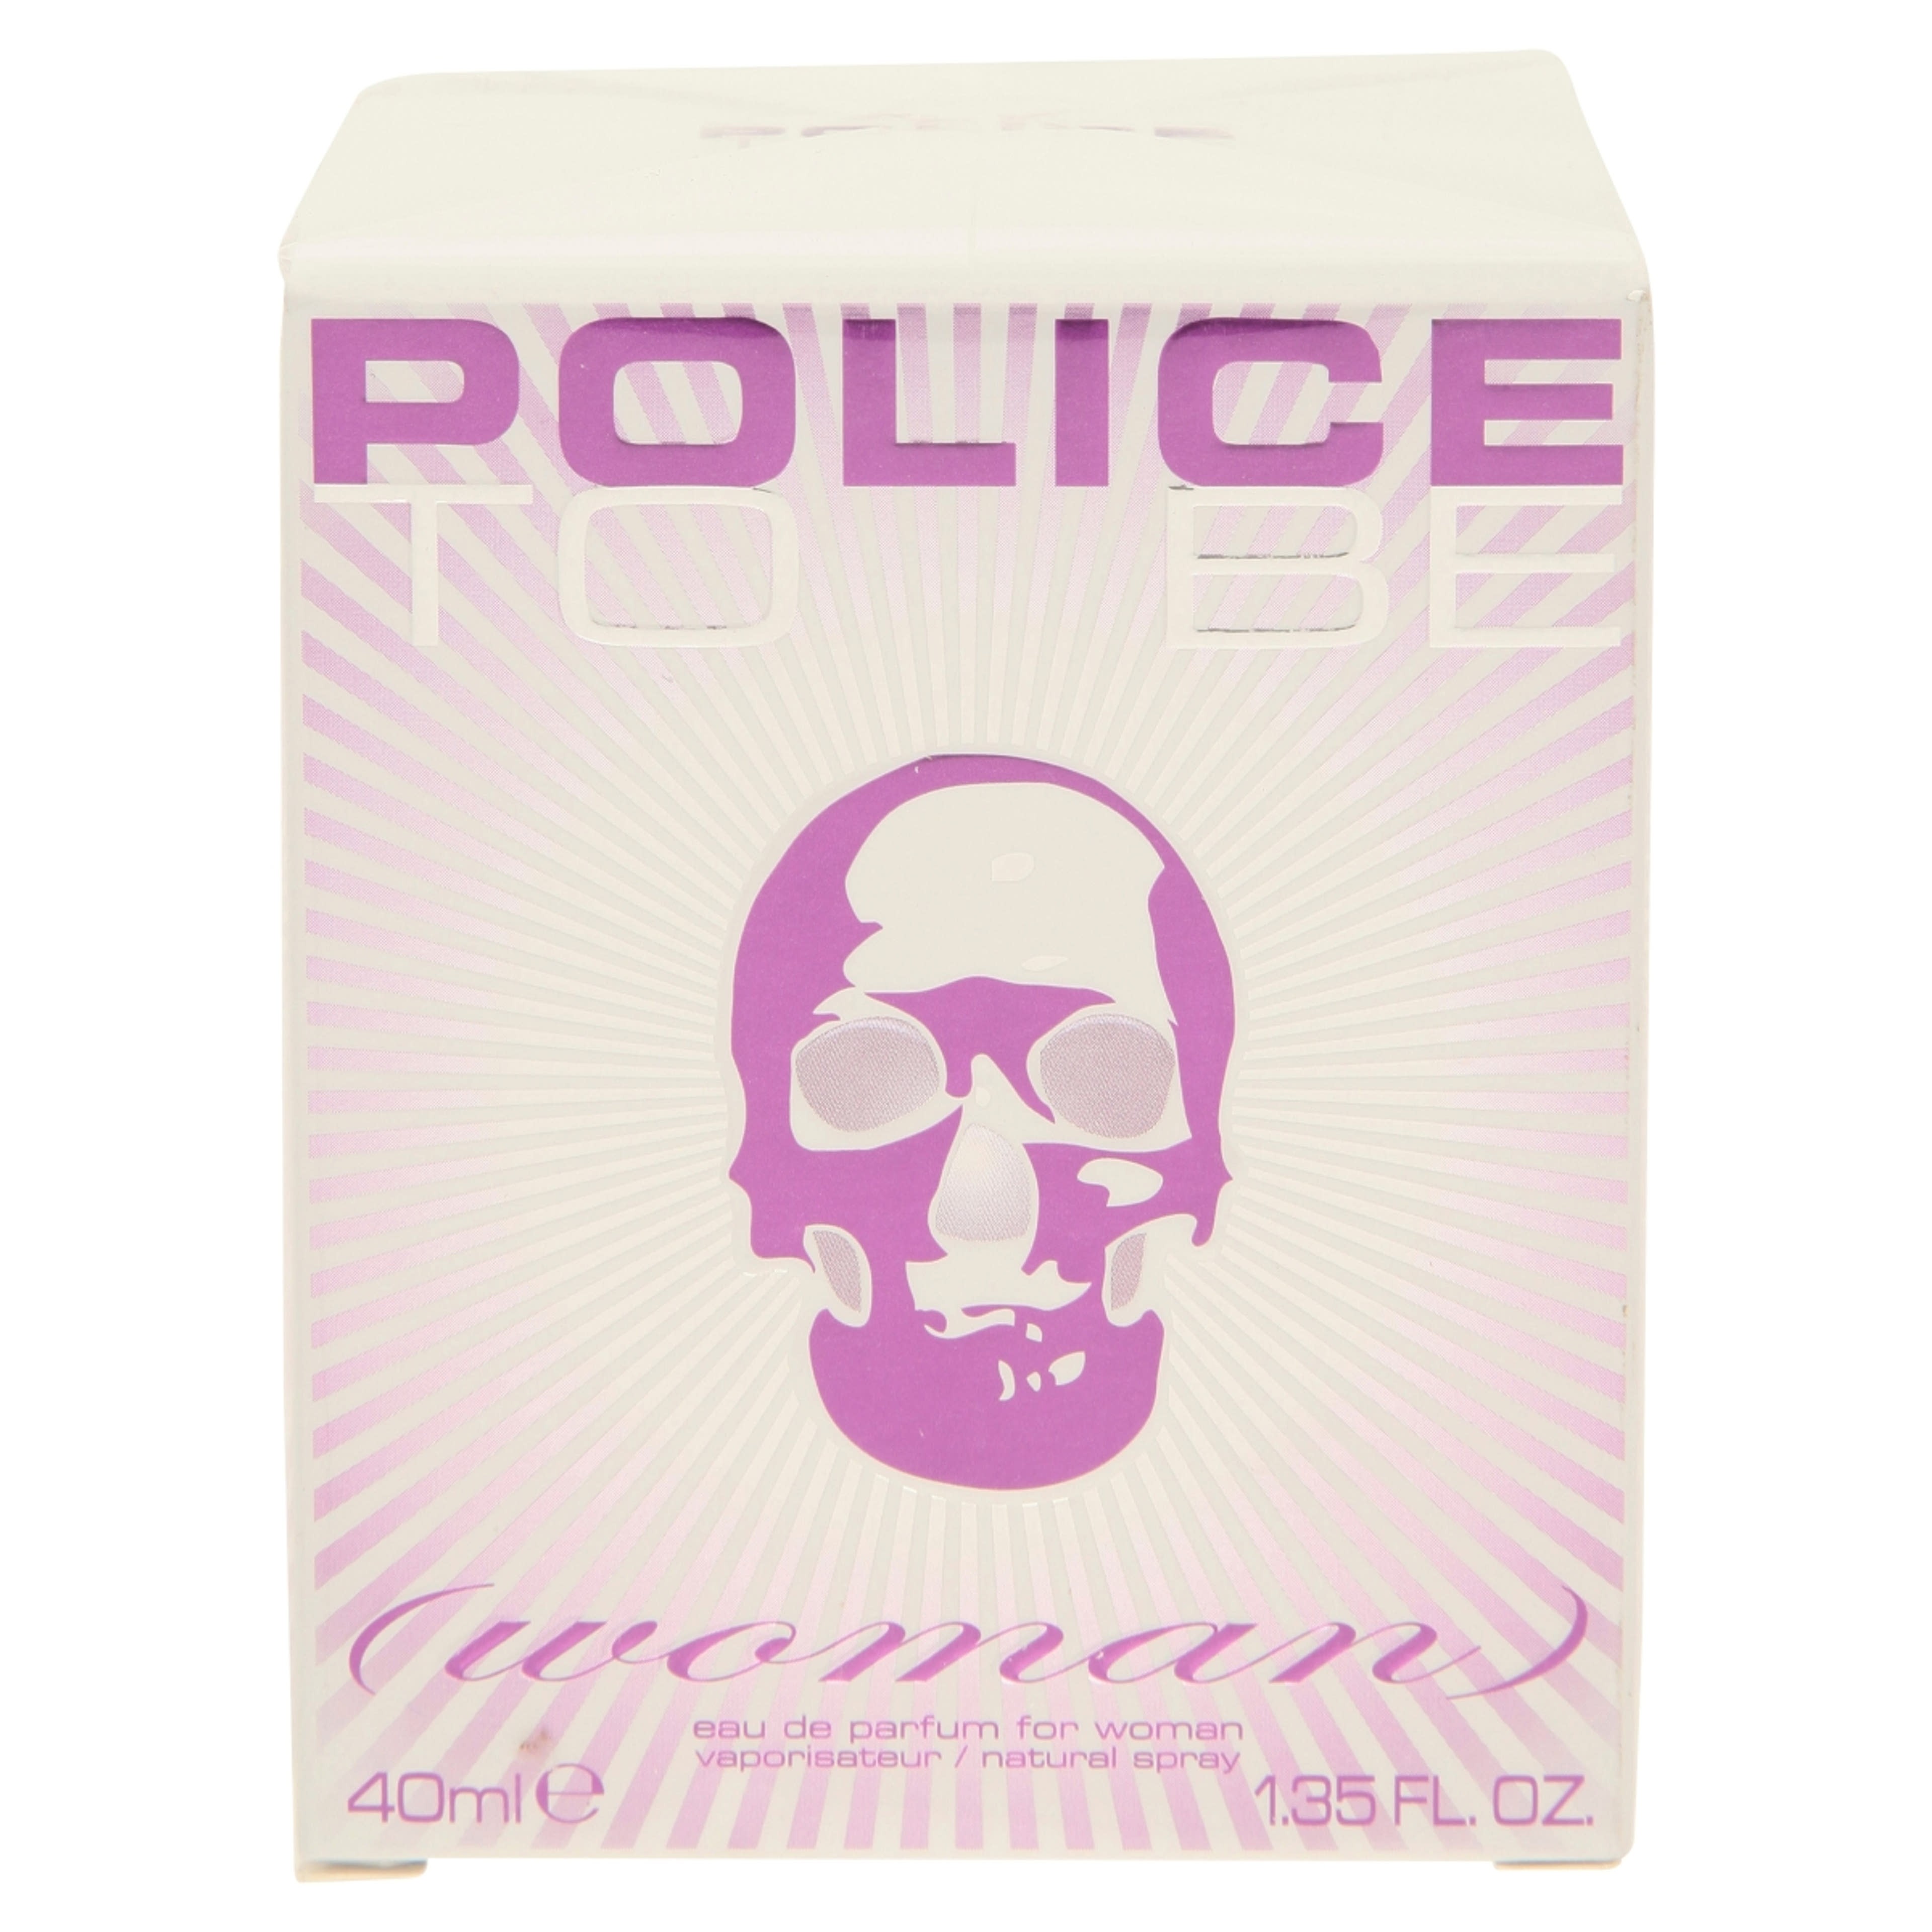 Police To Be női Eau de Toilette - 40 ml